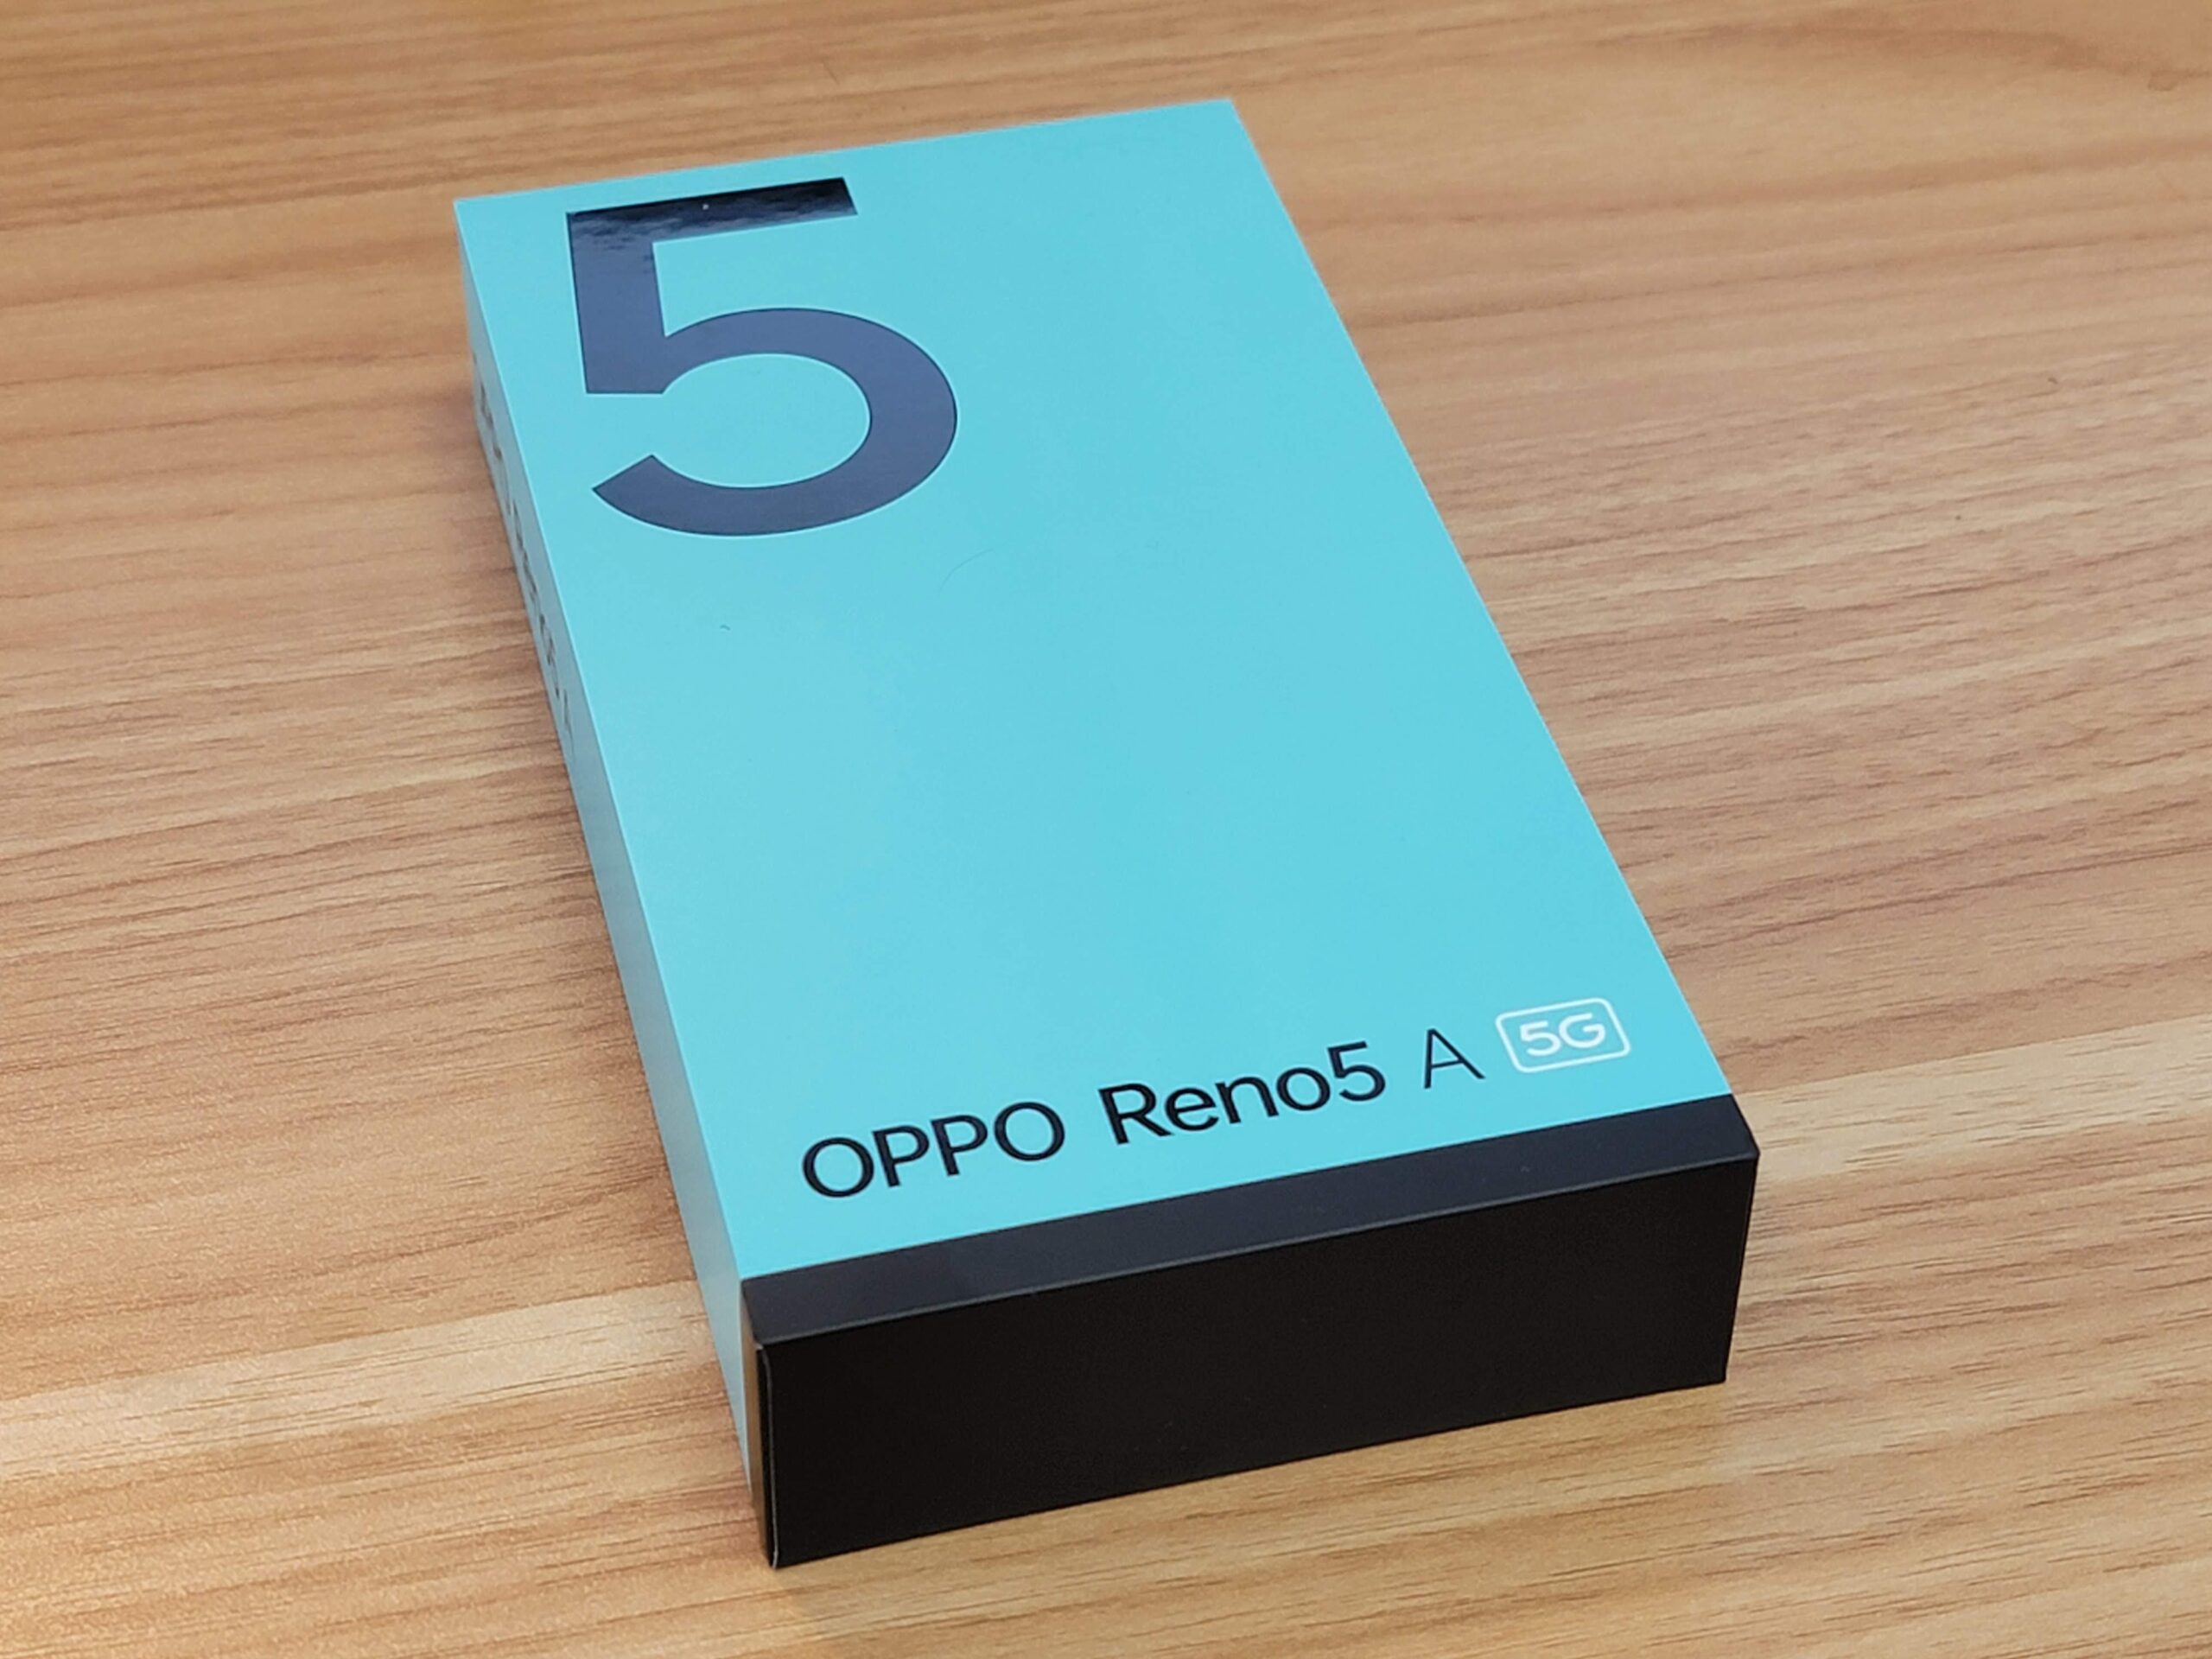 OPPO Reno5 A  アイスブルー SIMフリー端末 スマートフォン本体 スマートフォン/携帯電話 家電・スマホ・カメラ 55％以上節約